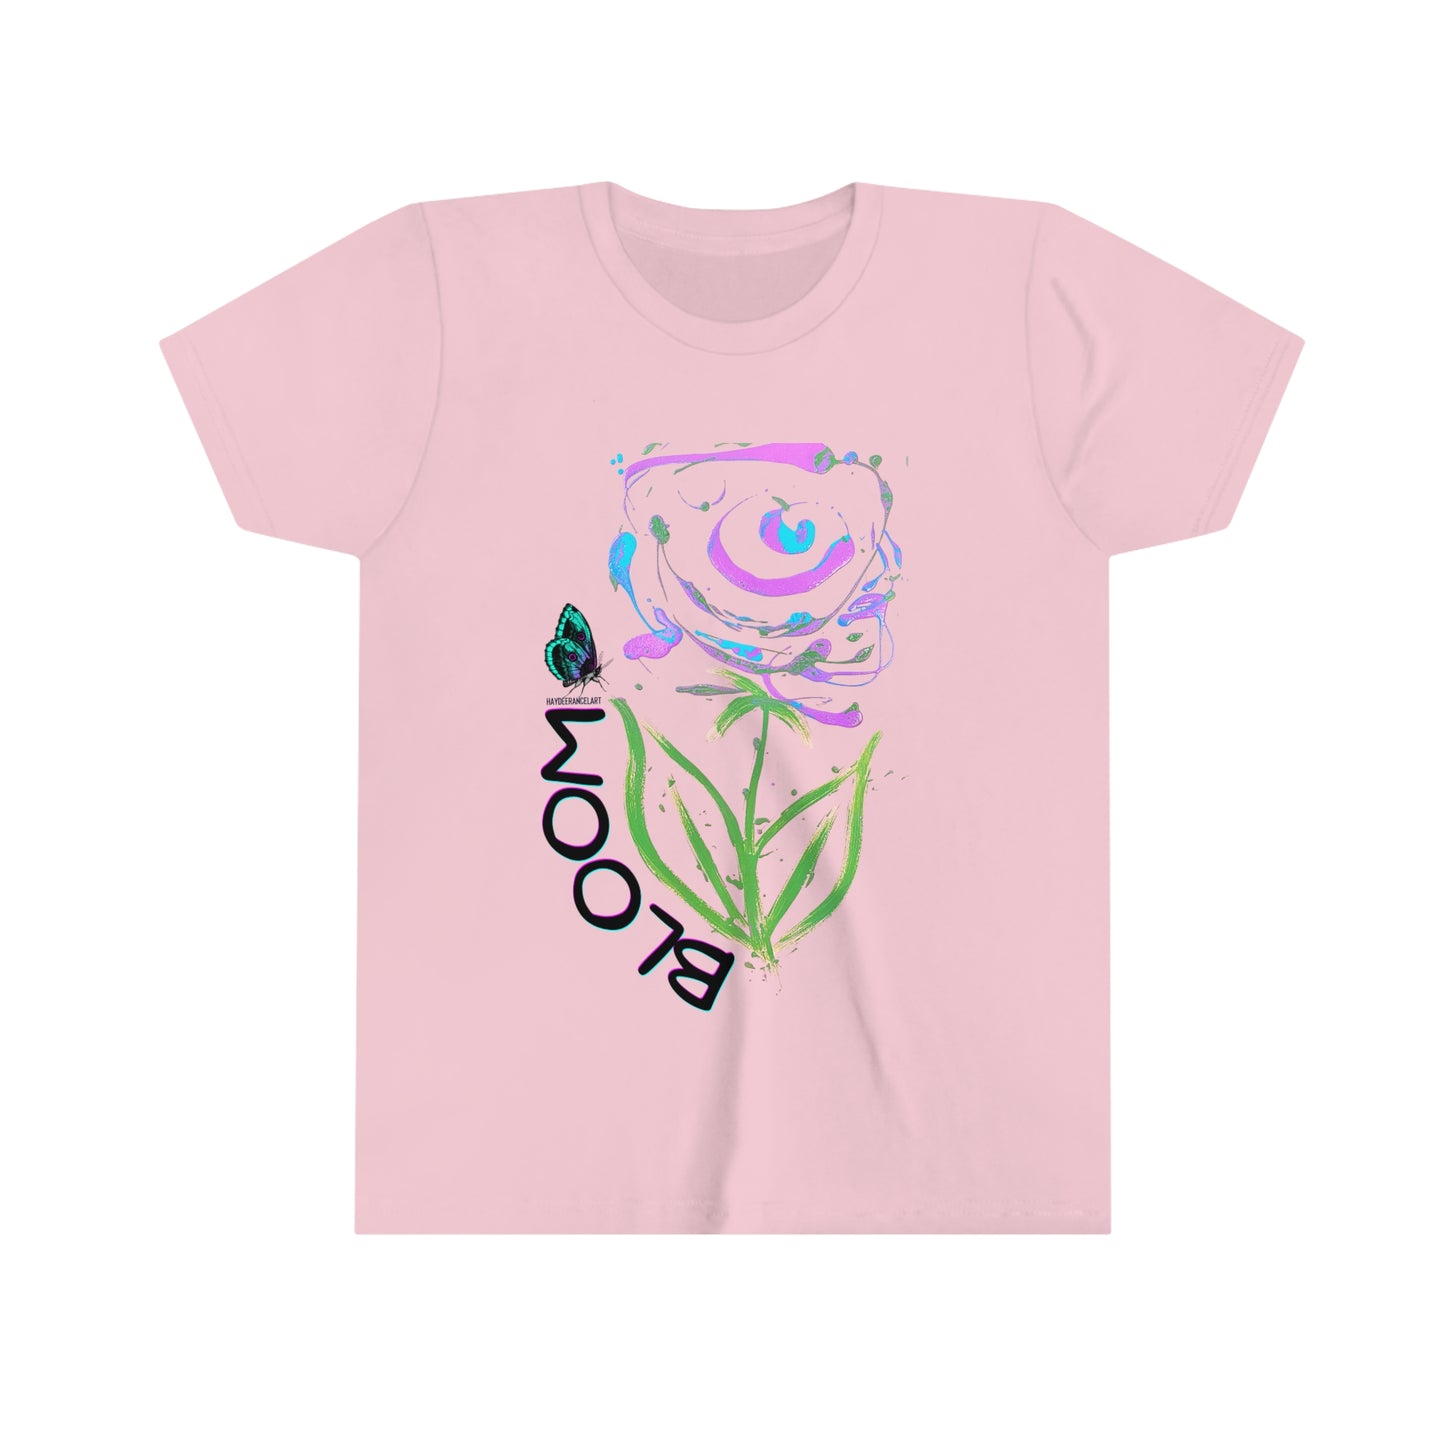 Bloom Abstract Rose Flower Art Kids Youth Short Sleeve Unisex White T-shirt